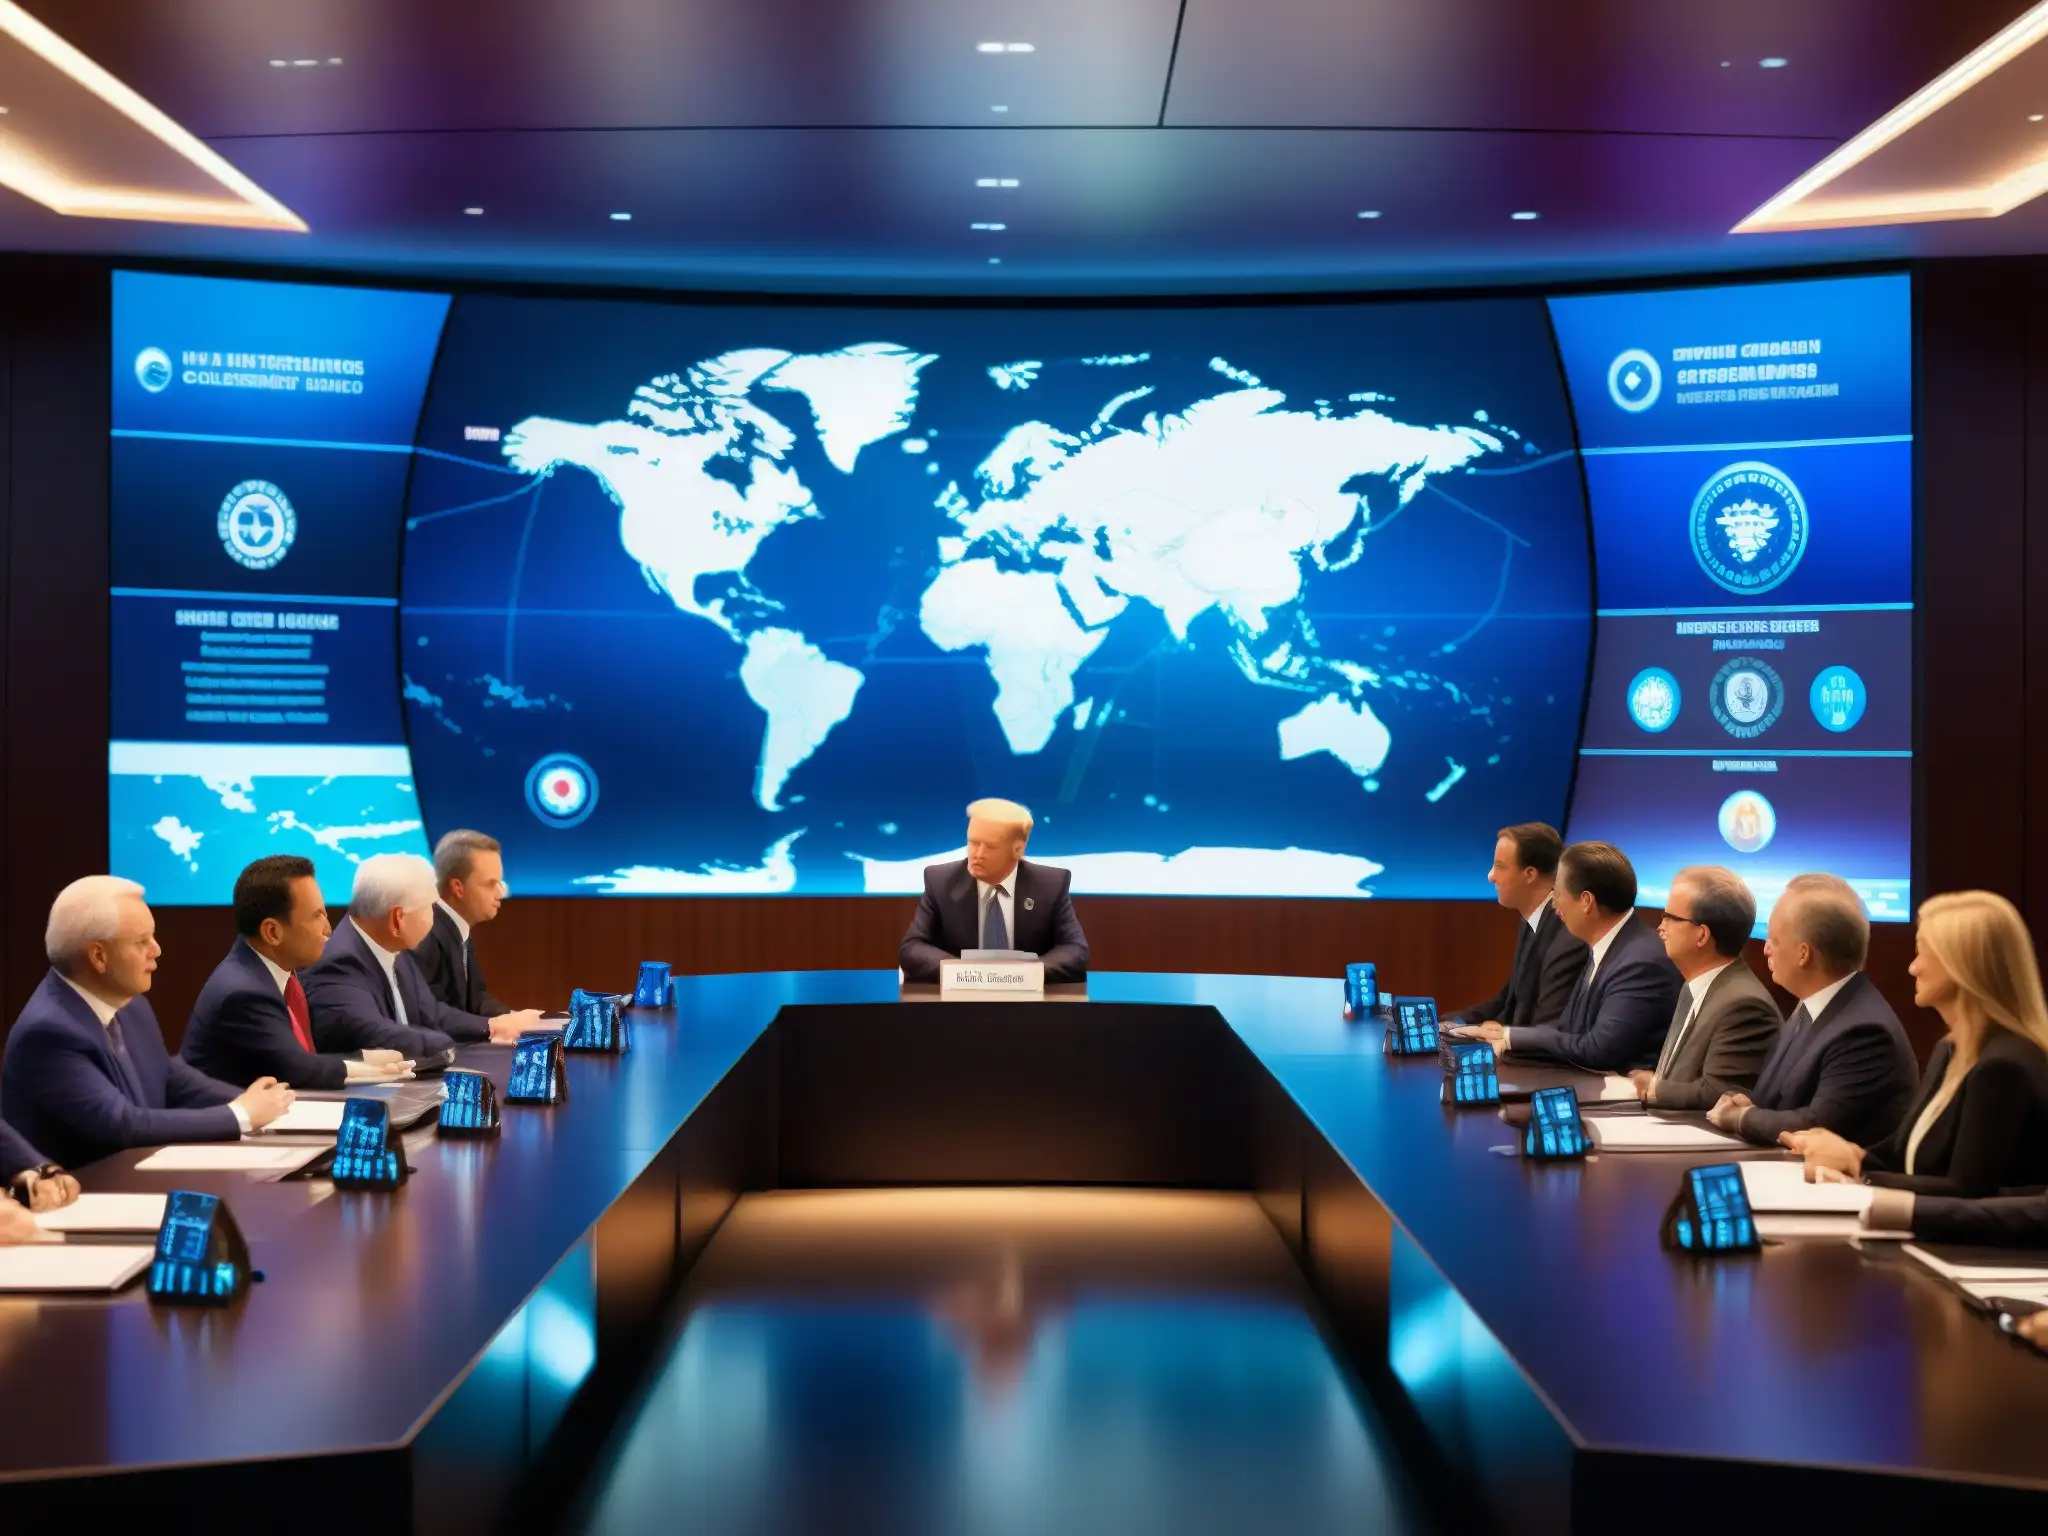 Reunión secreta de líderes mundiales en sala futurista